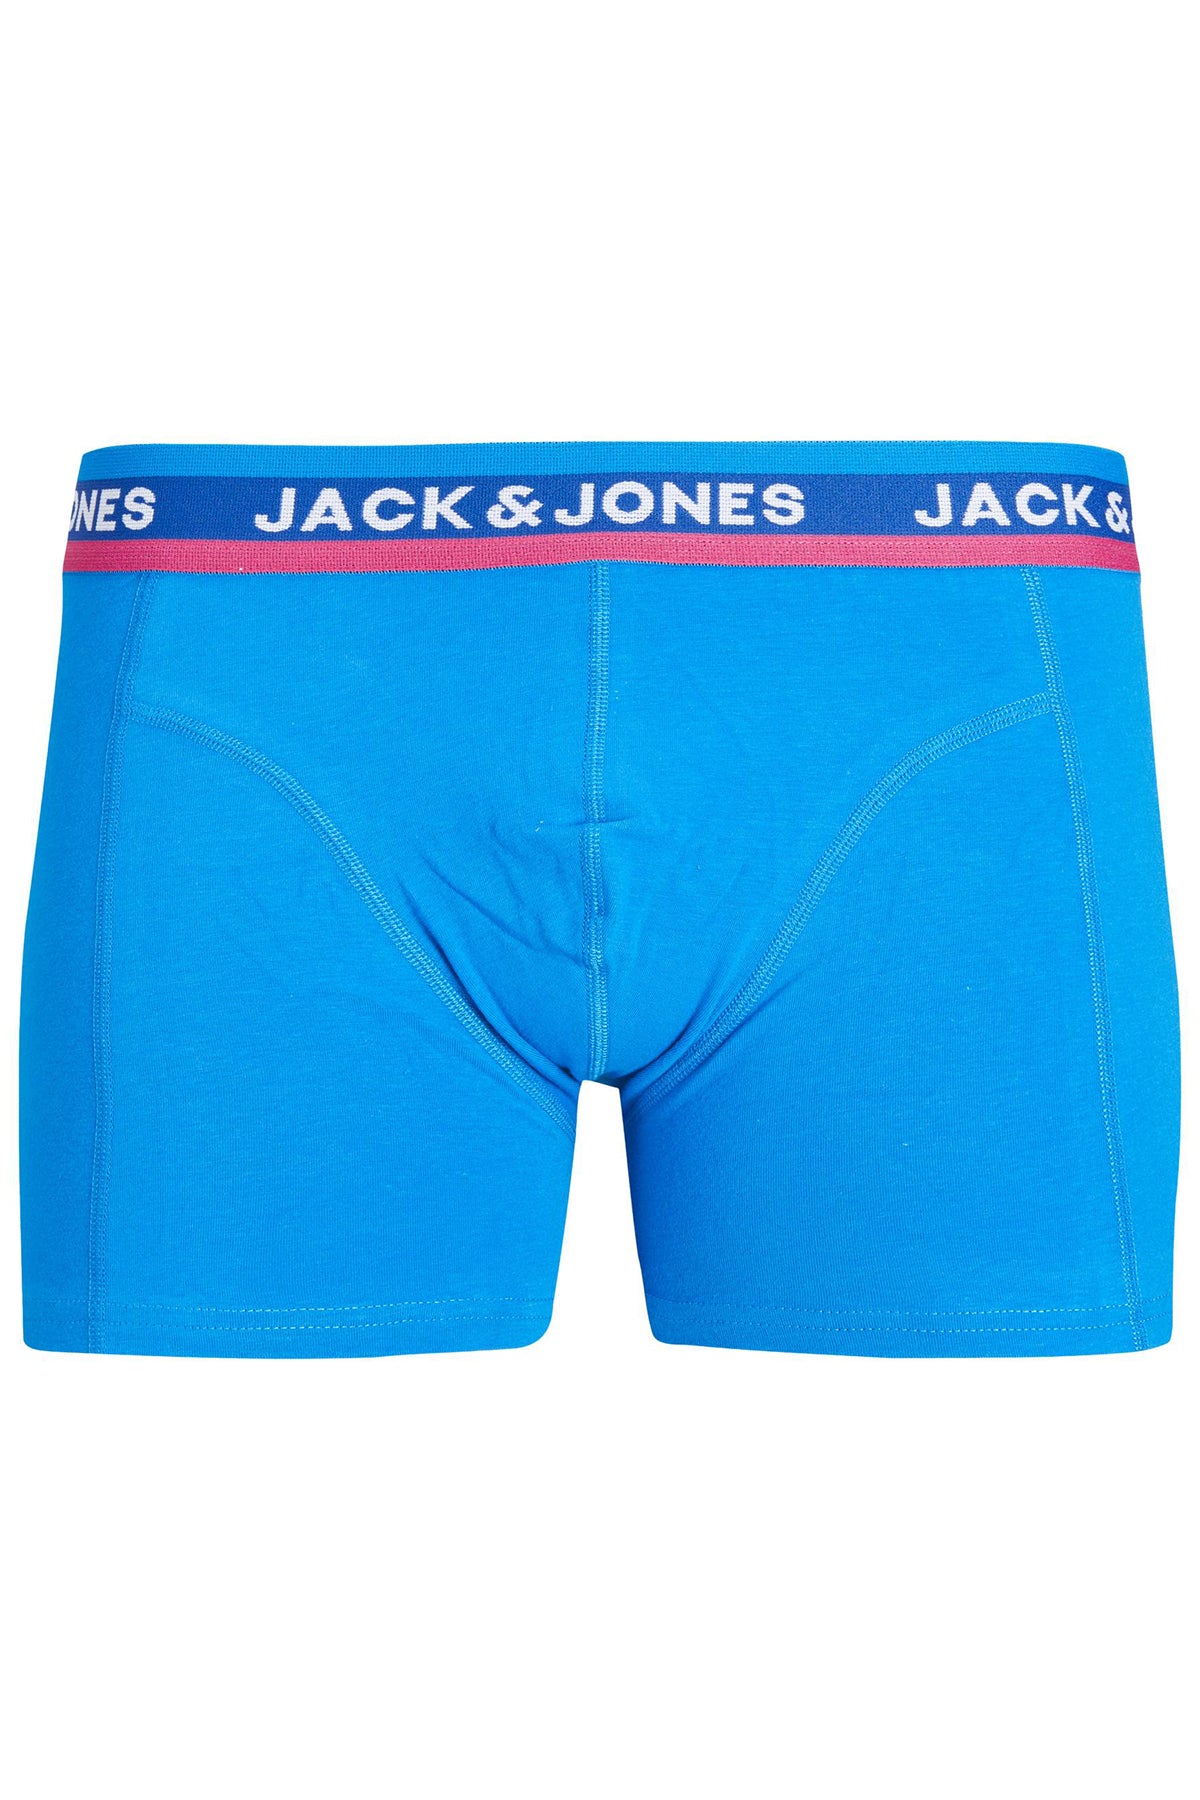 Jack & Jones Accessories Lakeland Pamuklu Esnek Erkek Boxer 12241886 MAVİ